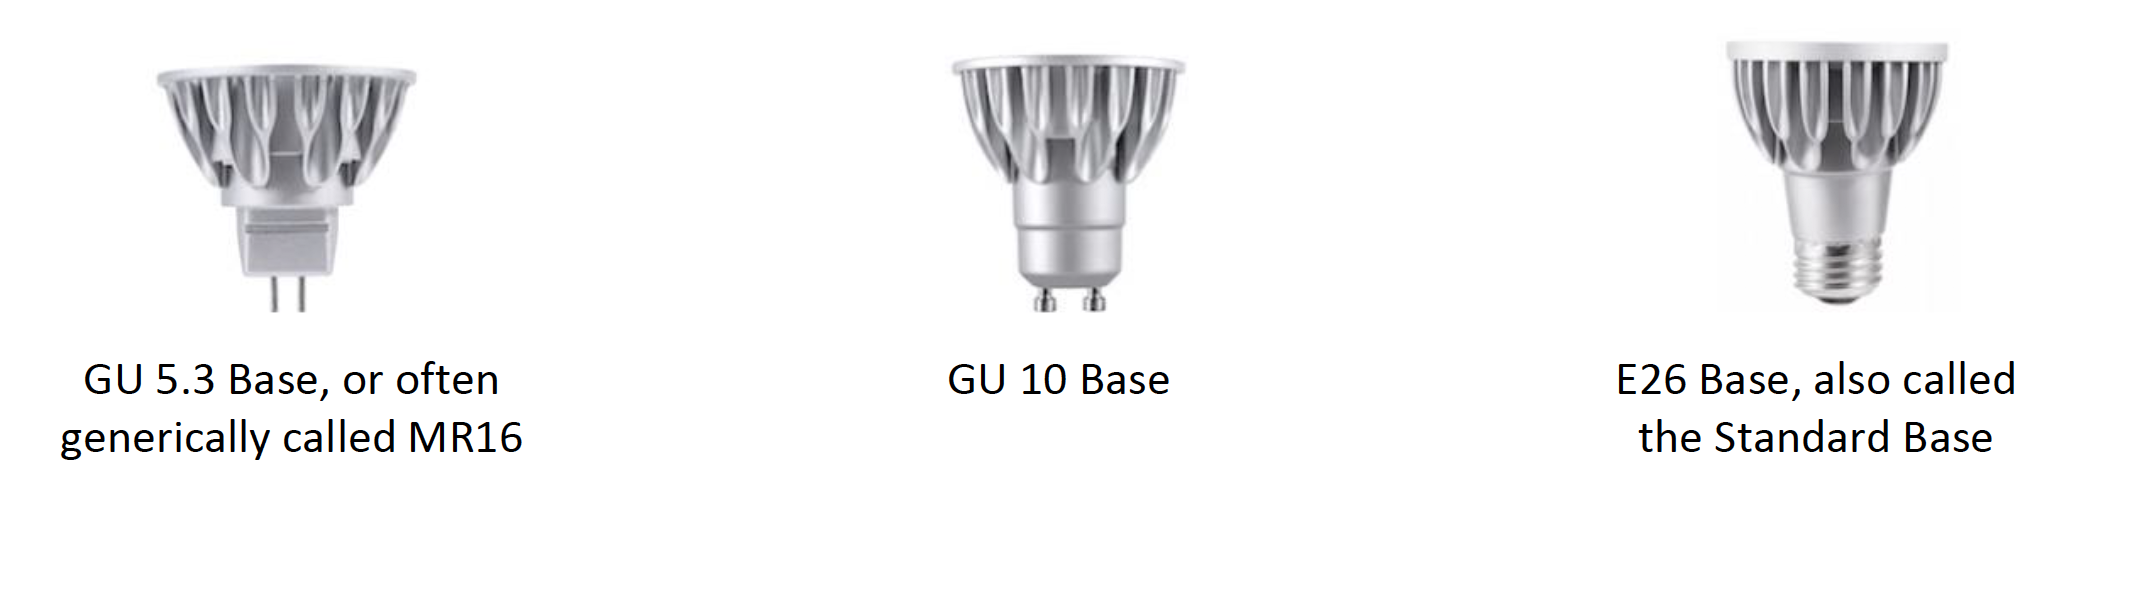 GU 5.3 base, or often generically called MR16 - GU 10 base - E26 base, also called the standard base